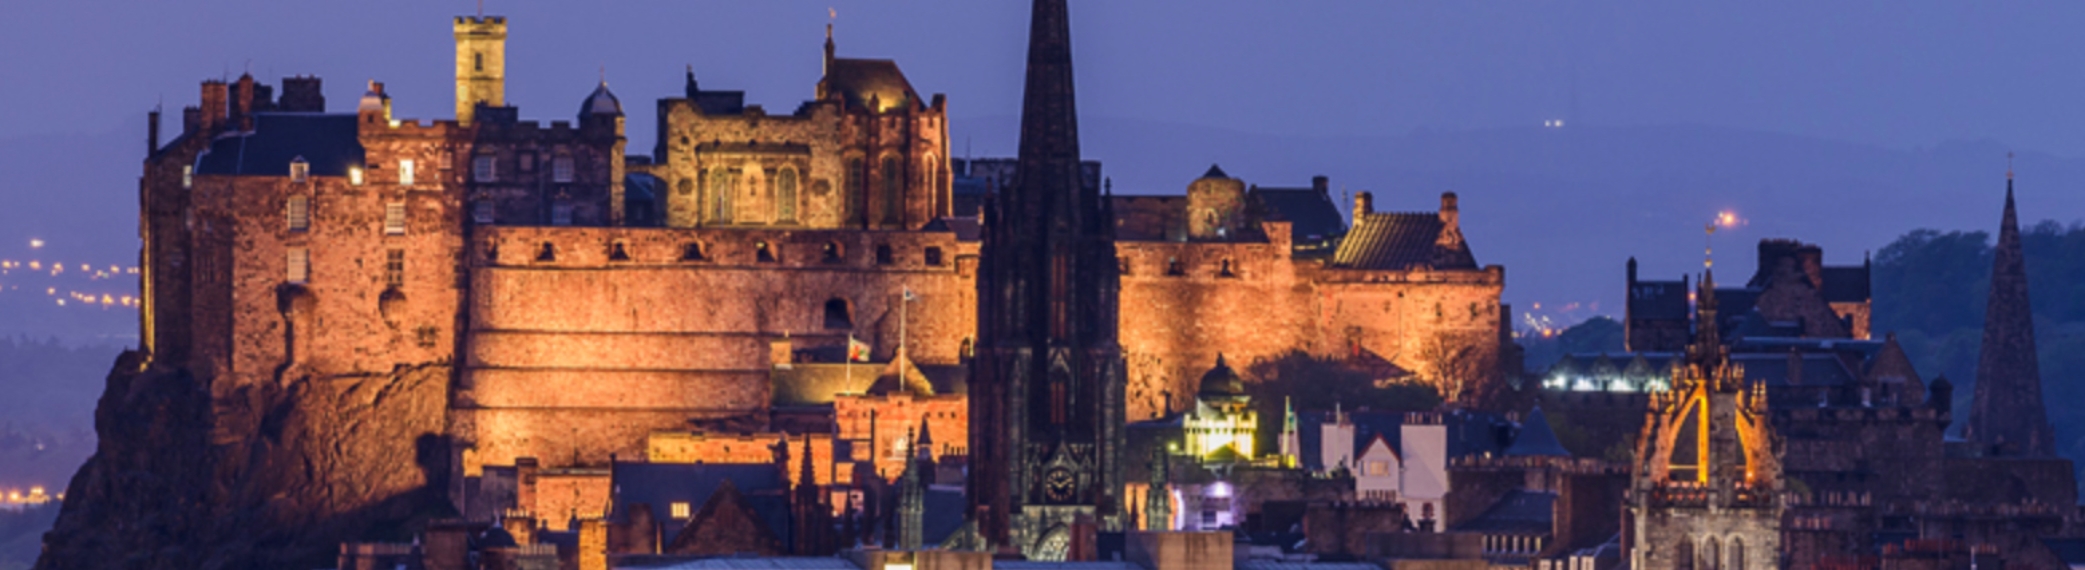 Lighting of Edinburgh Castle